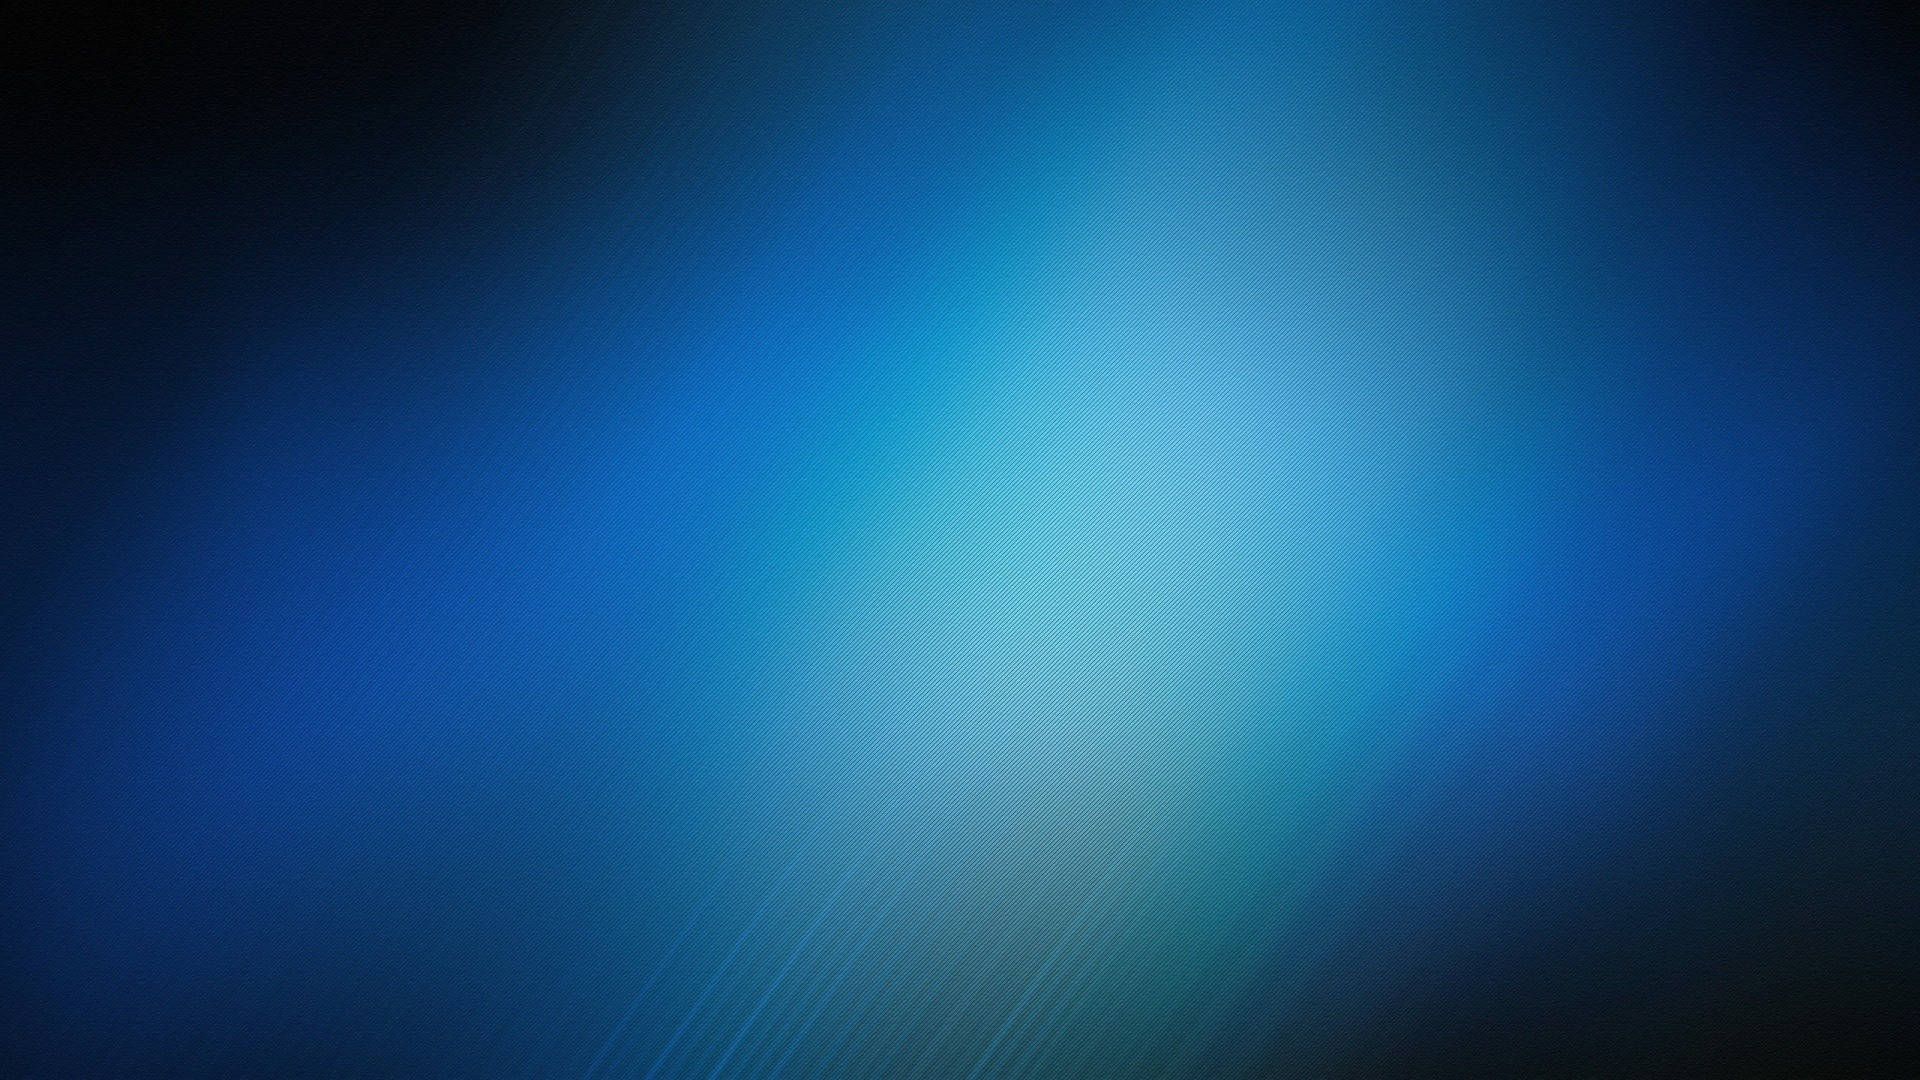 Blurry Blue Texture Background